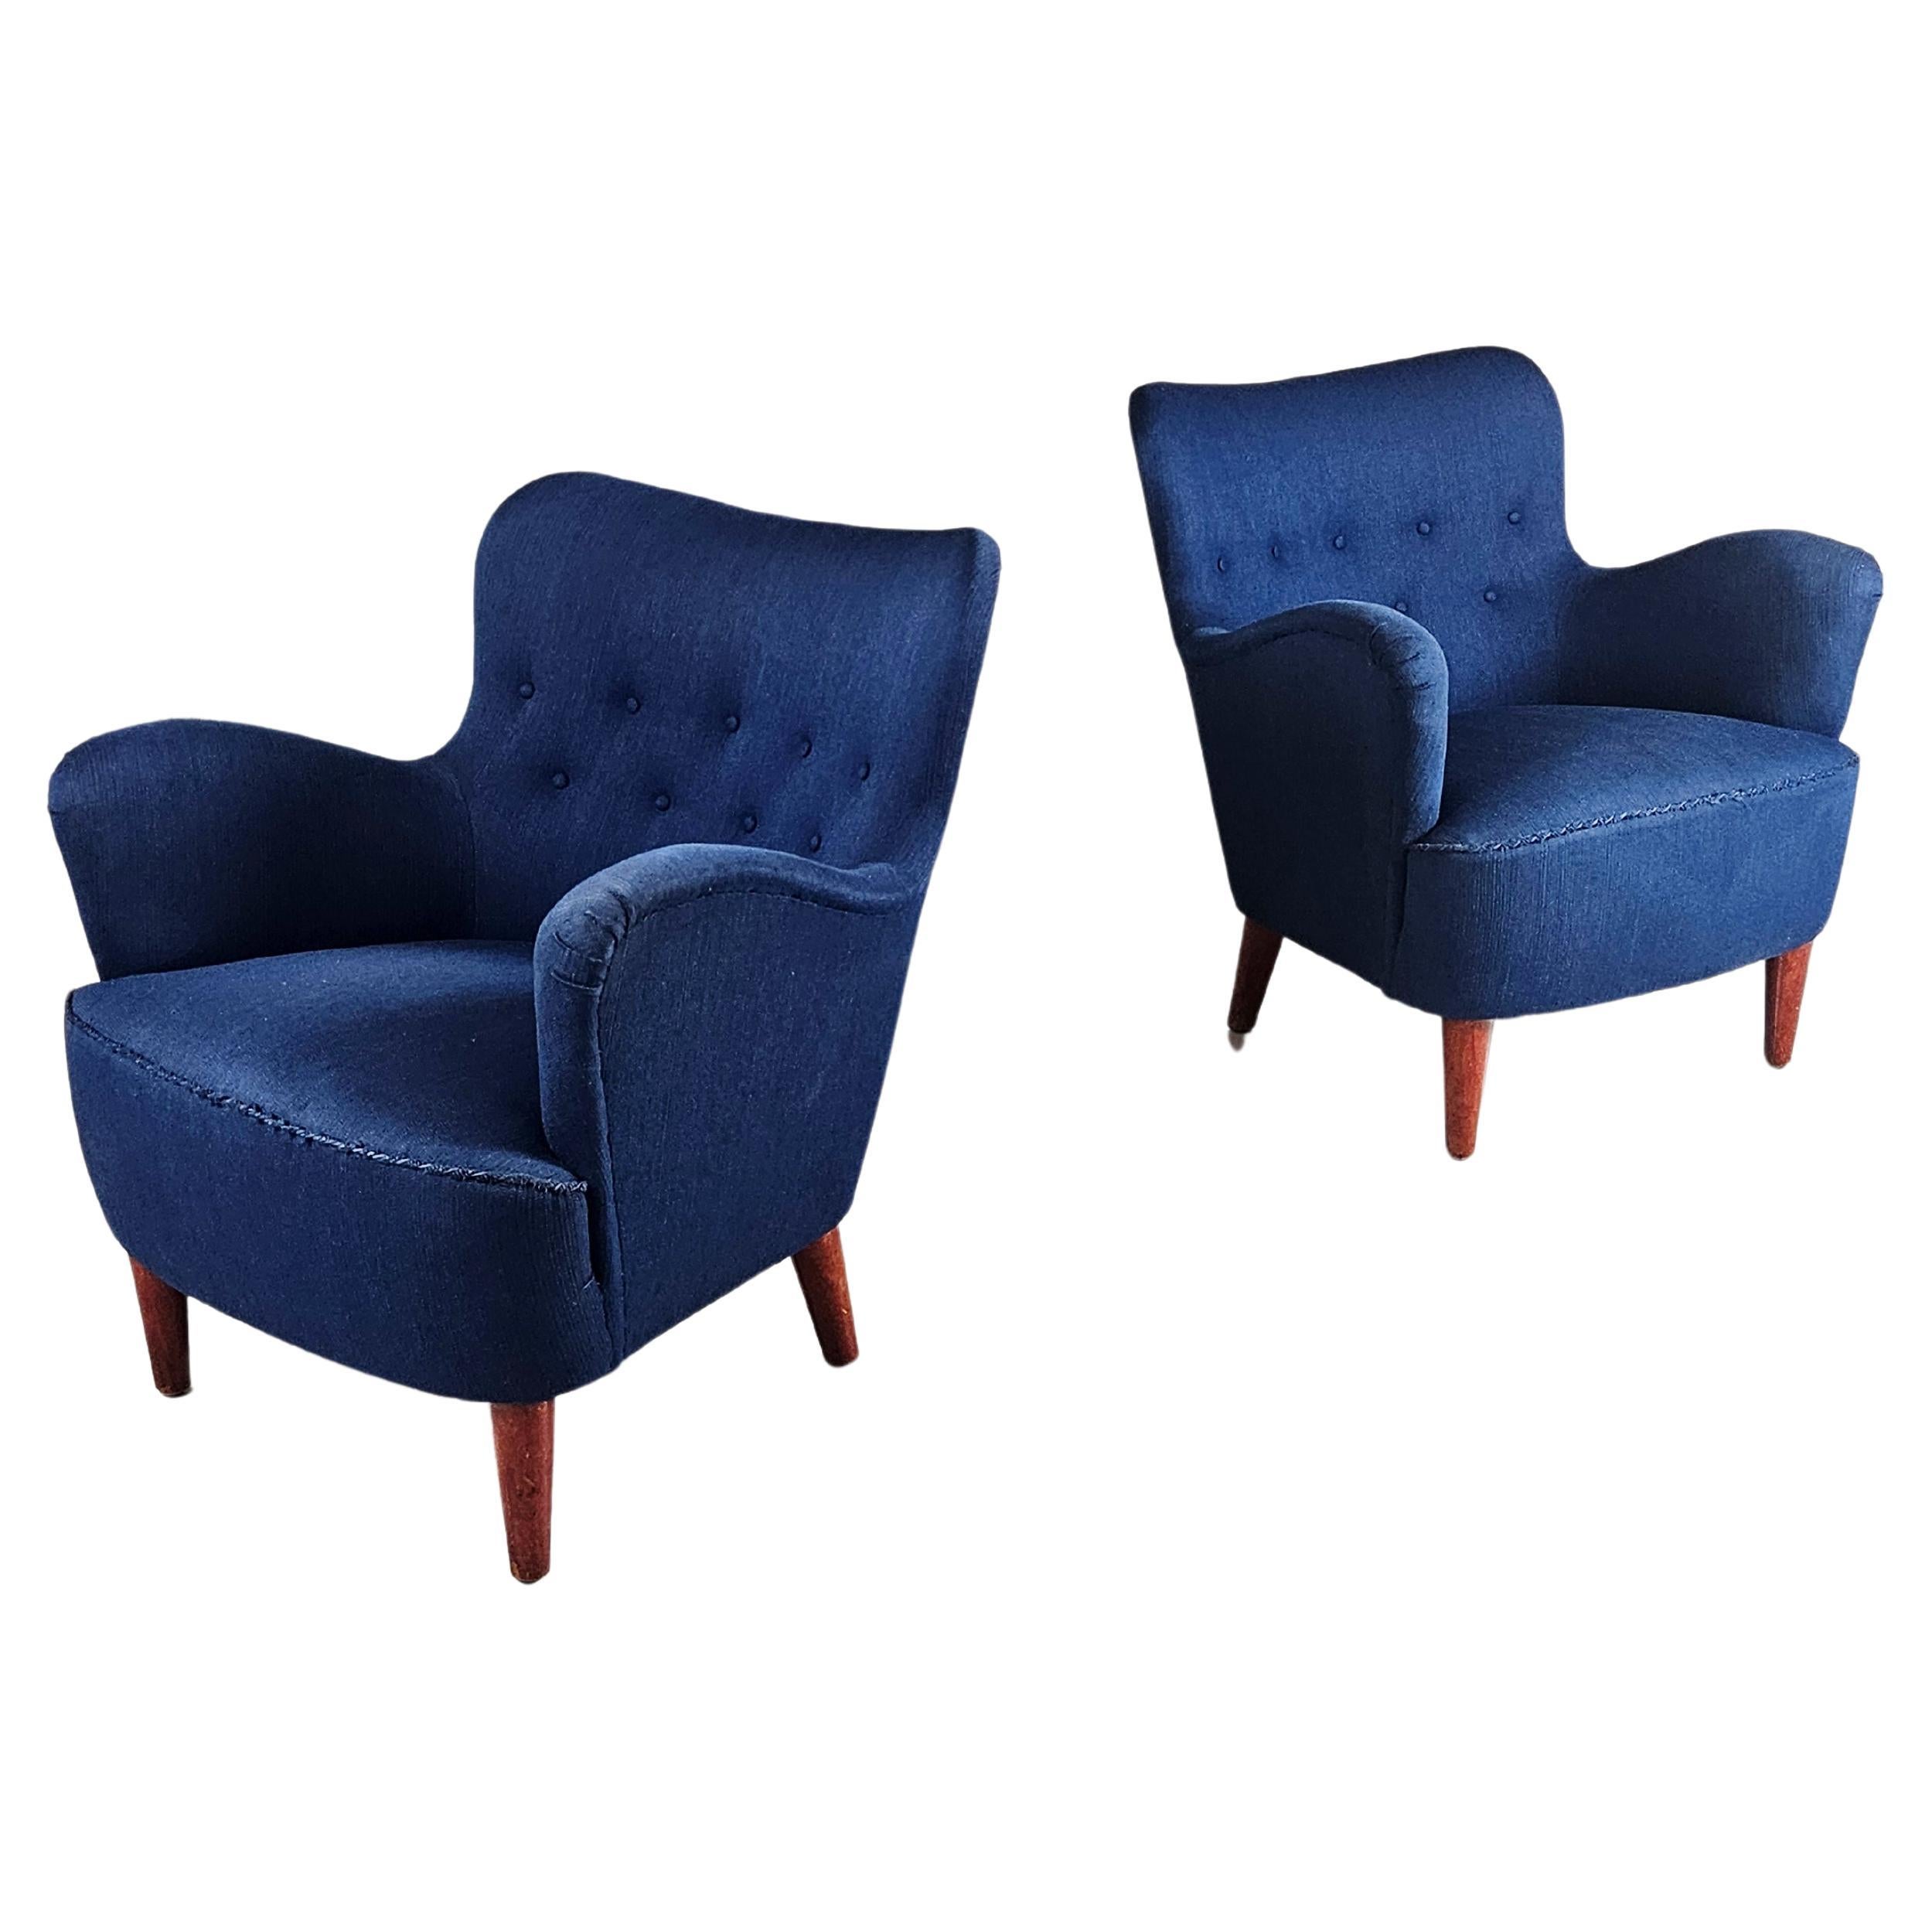 Scandinavian modern lounge chairs, unknown designer, Sweden, 1960s For Sale